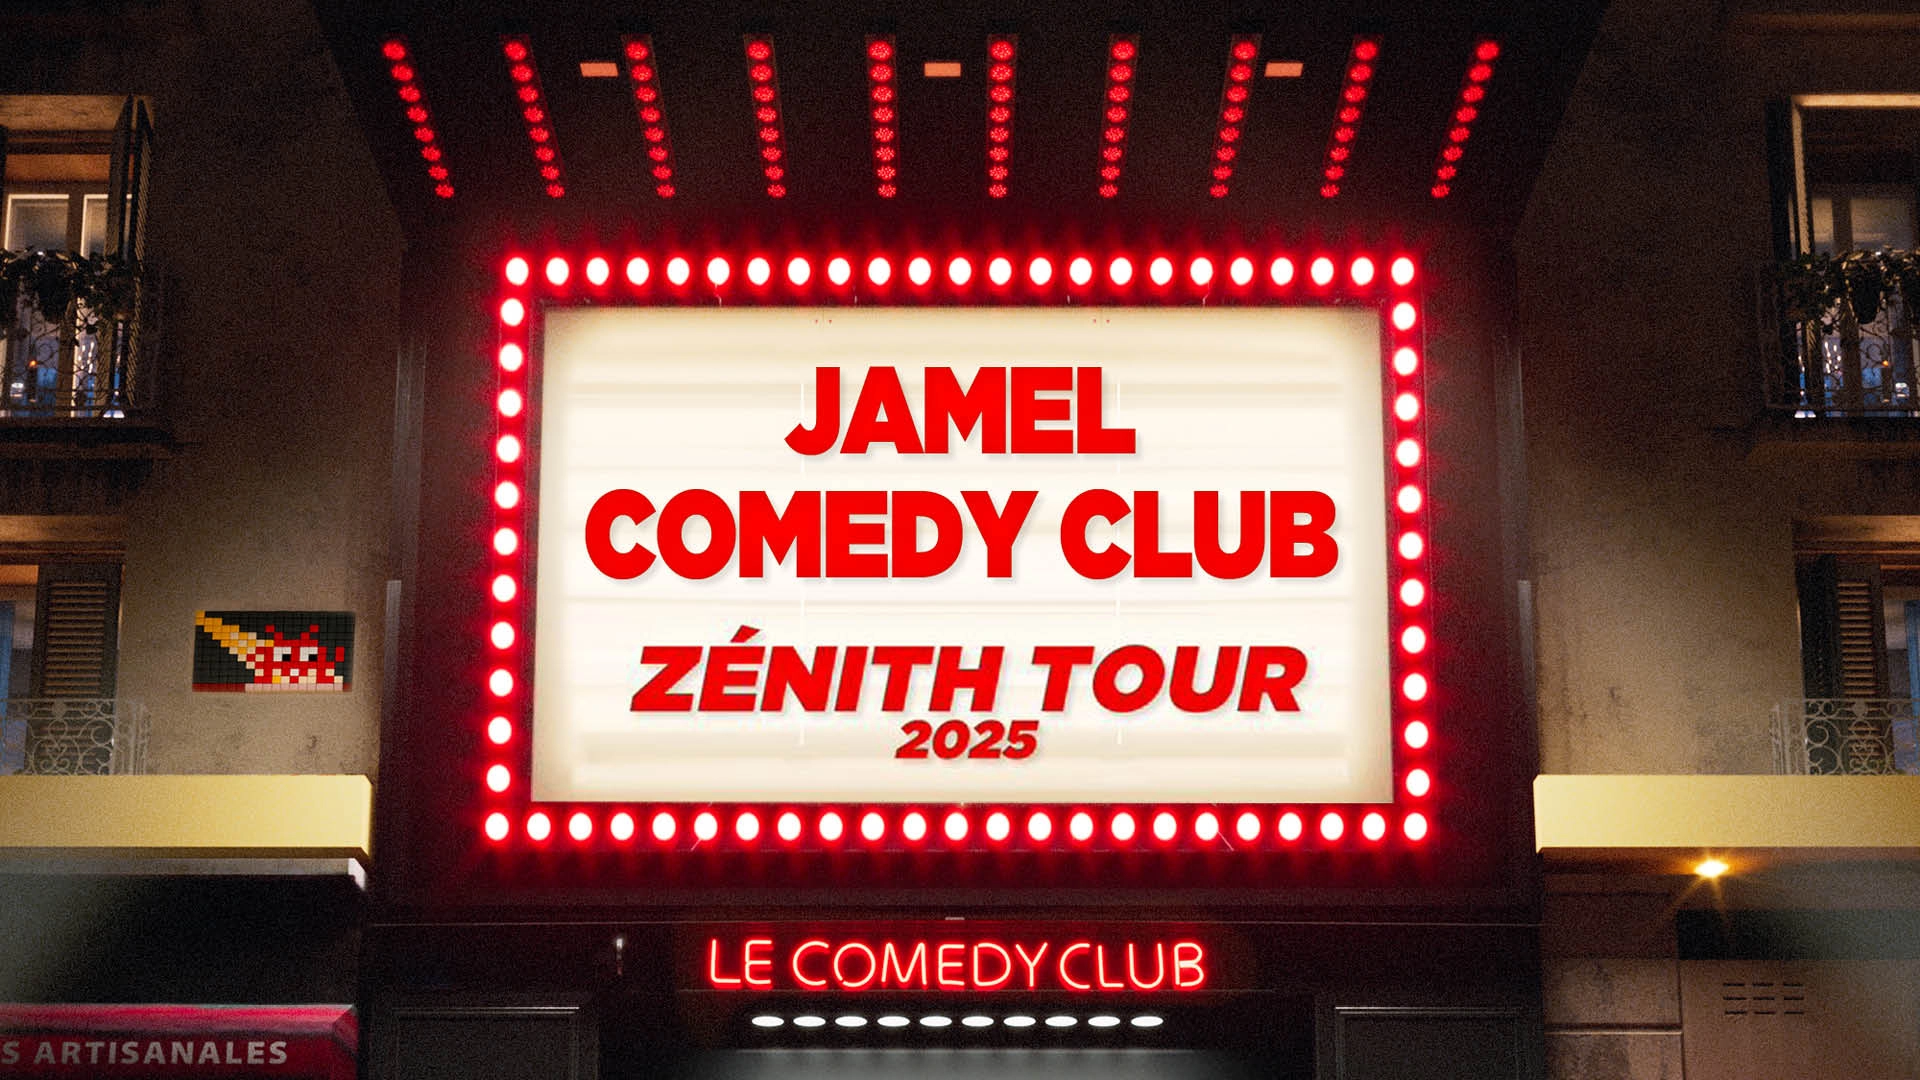 Jamel Comedy Club Zenith Tour en Arkea Arena Tickets